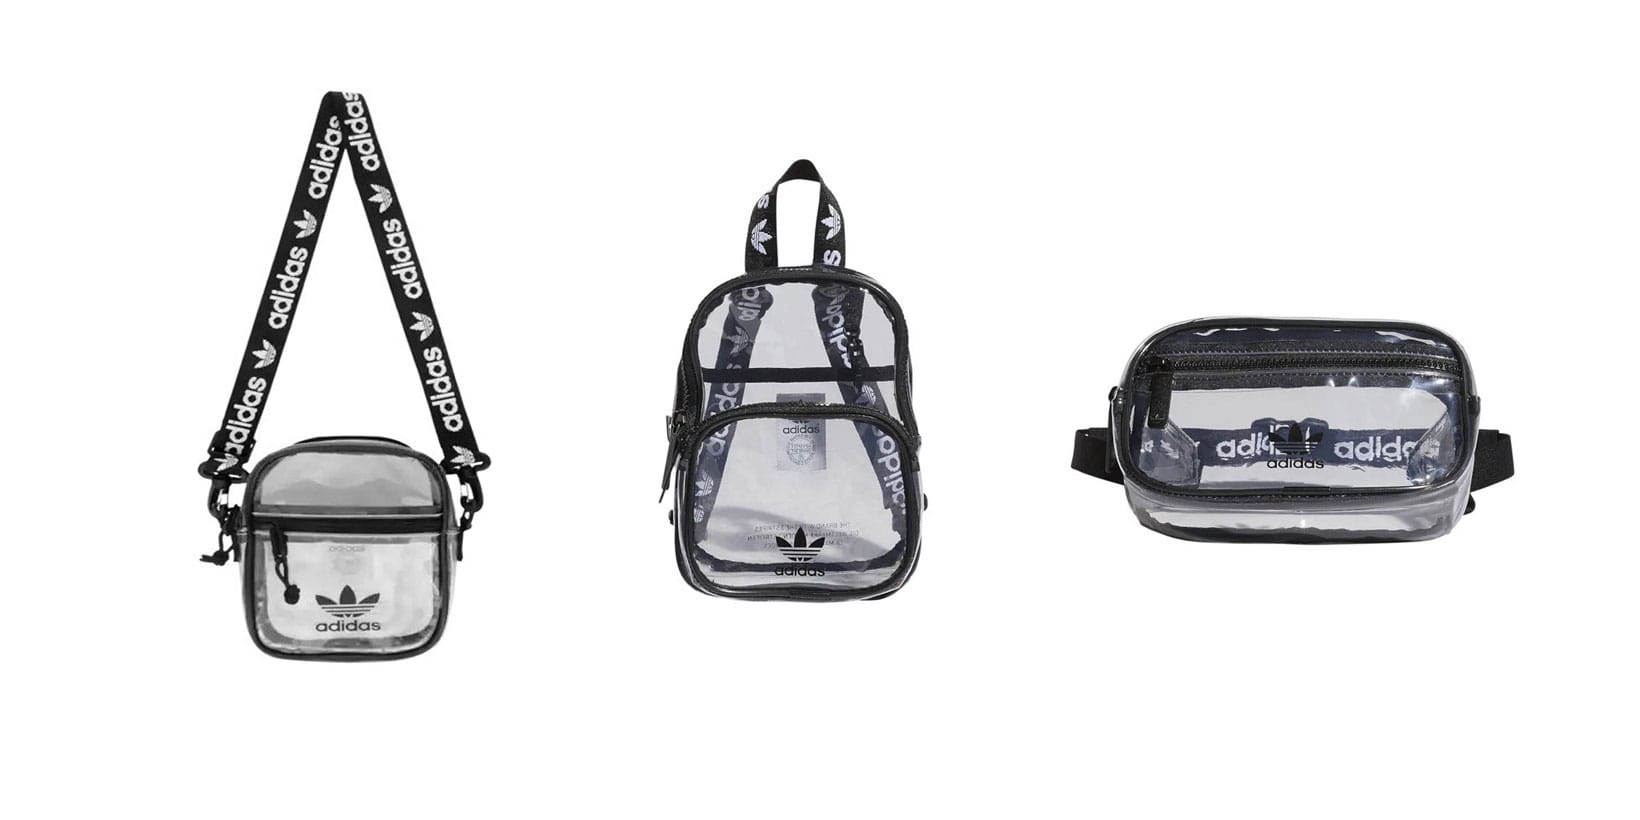 adidas transparent backpack